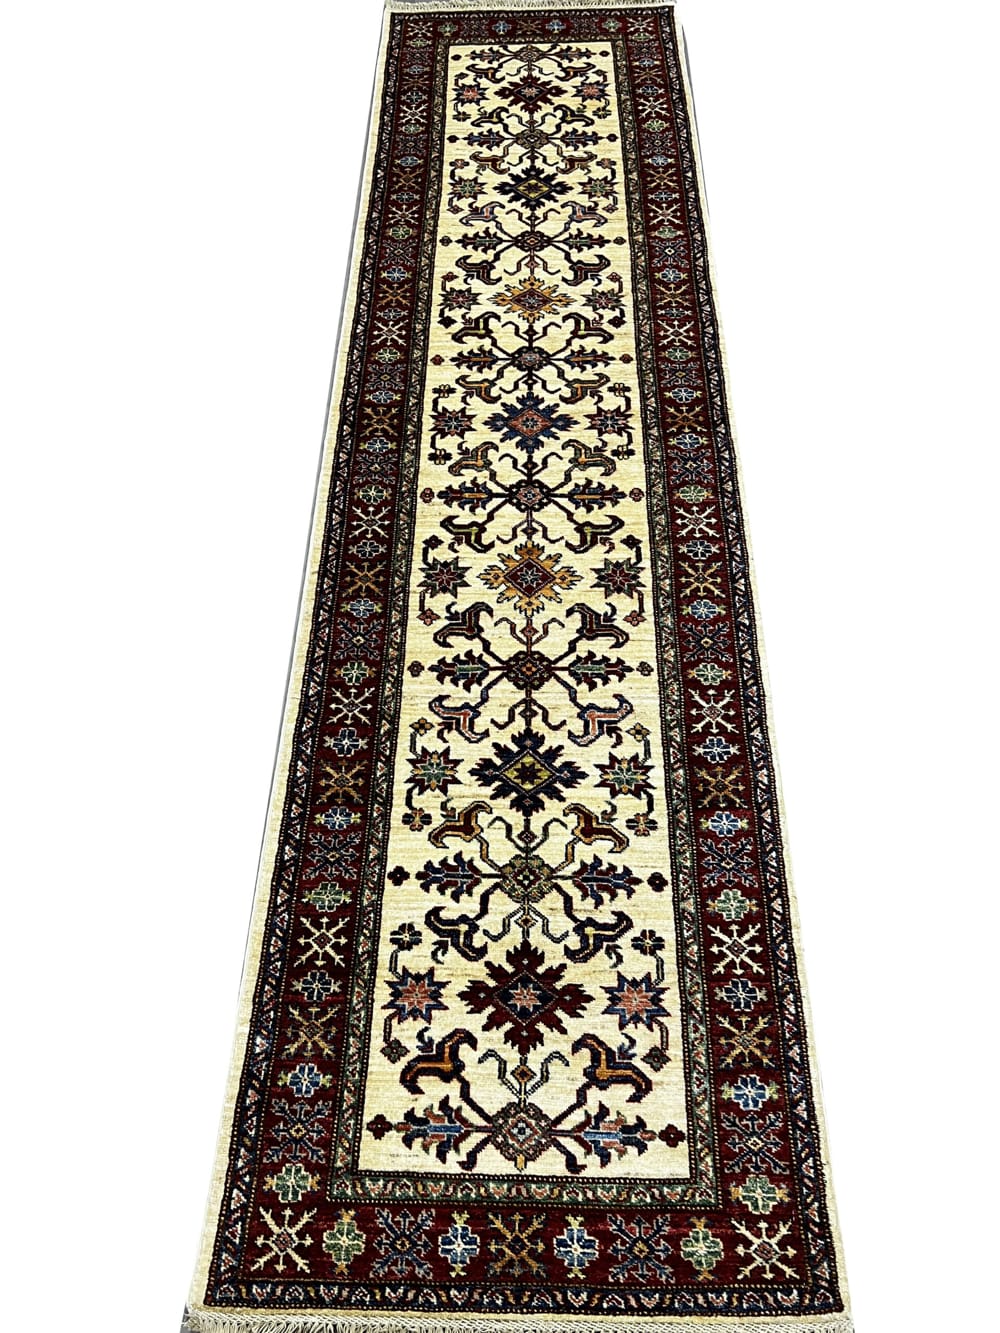 Rug# 26487. Afghan Chechen weave hall runner, circa 2010, 19th century Kazak inspired, HSW & Veg dyes, size 295x80 cm